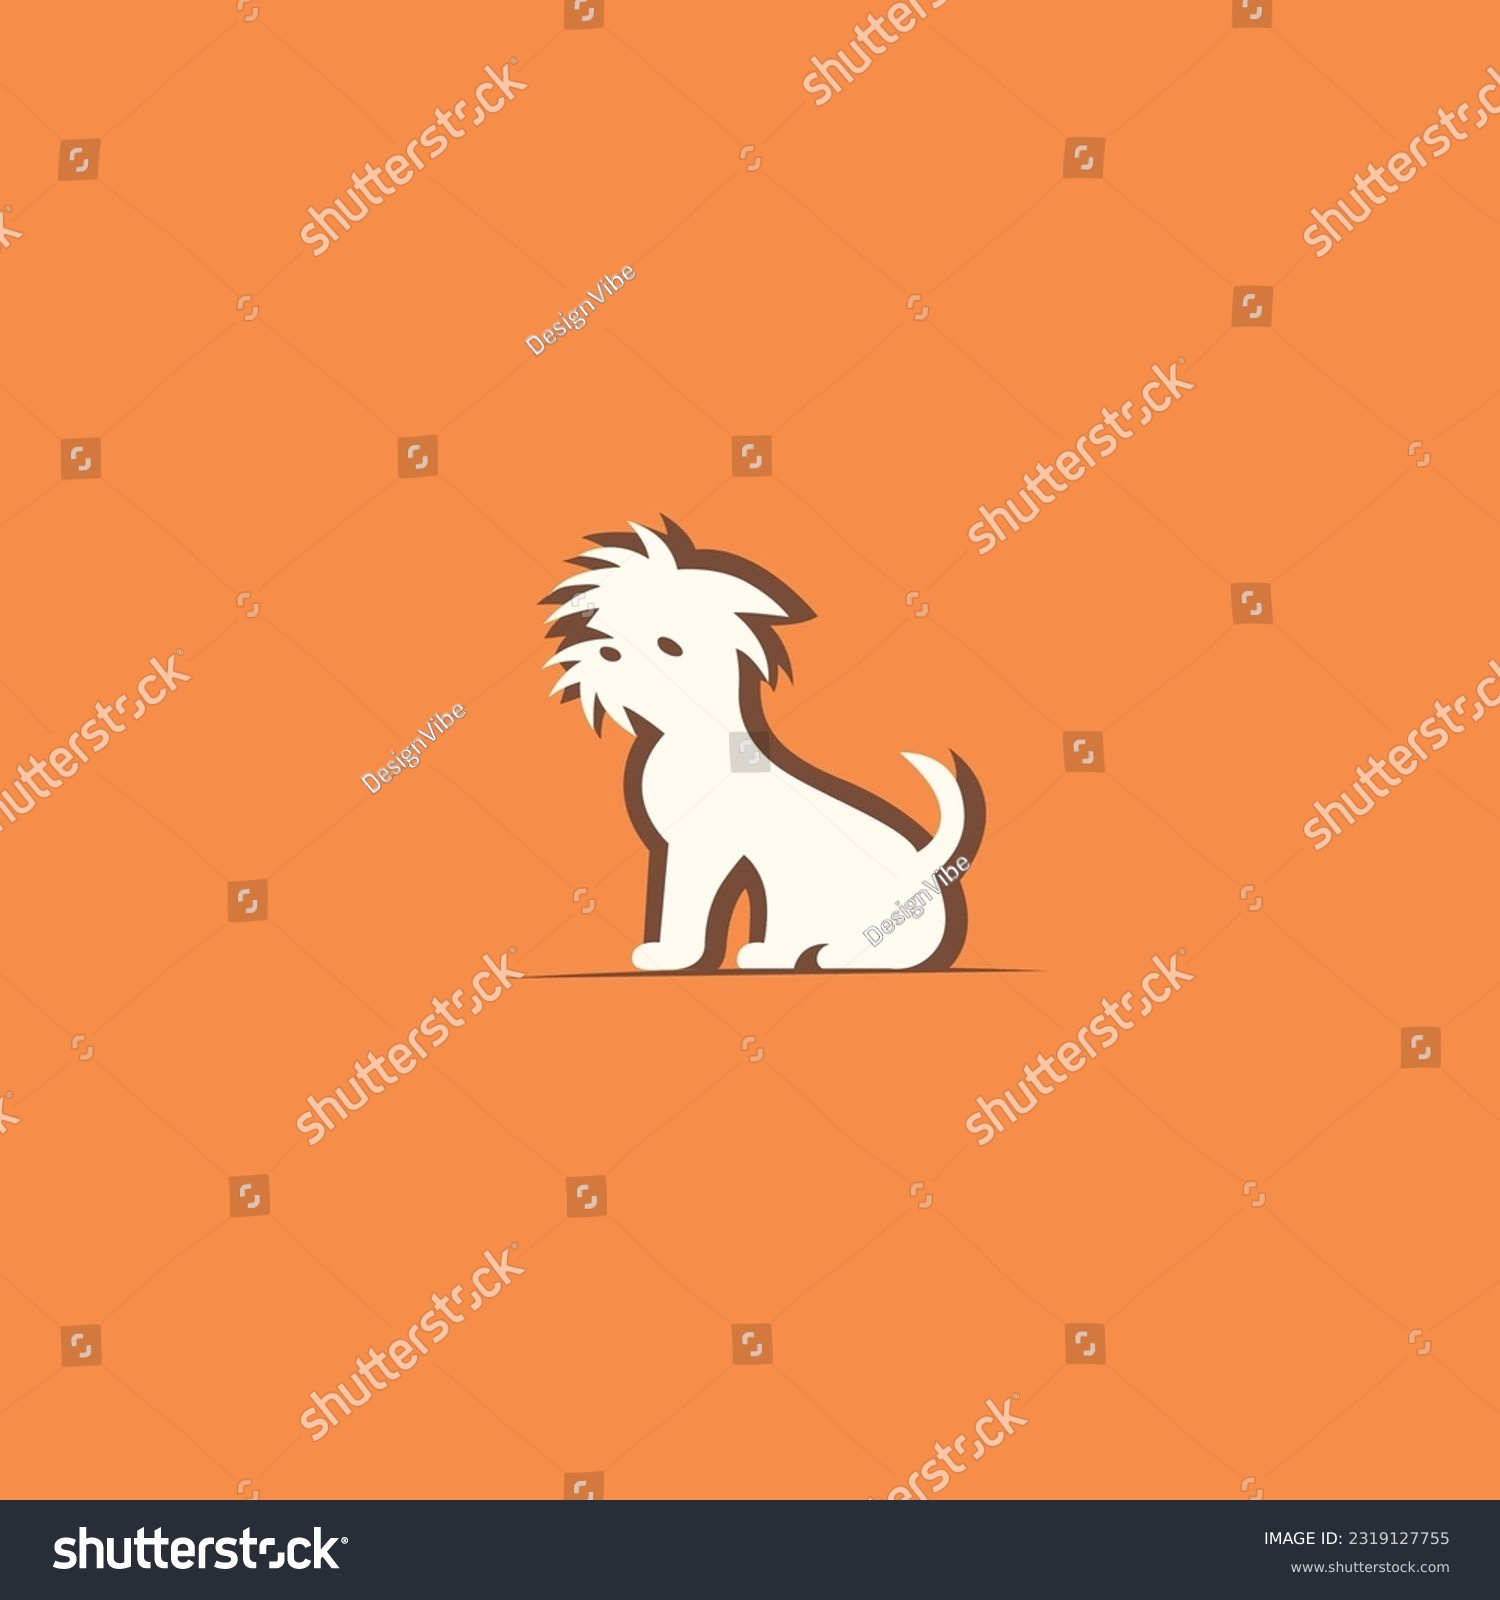 SVG of dog cute cartoon design, Shisu dog, shih tzu vector illustration. svg